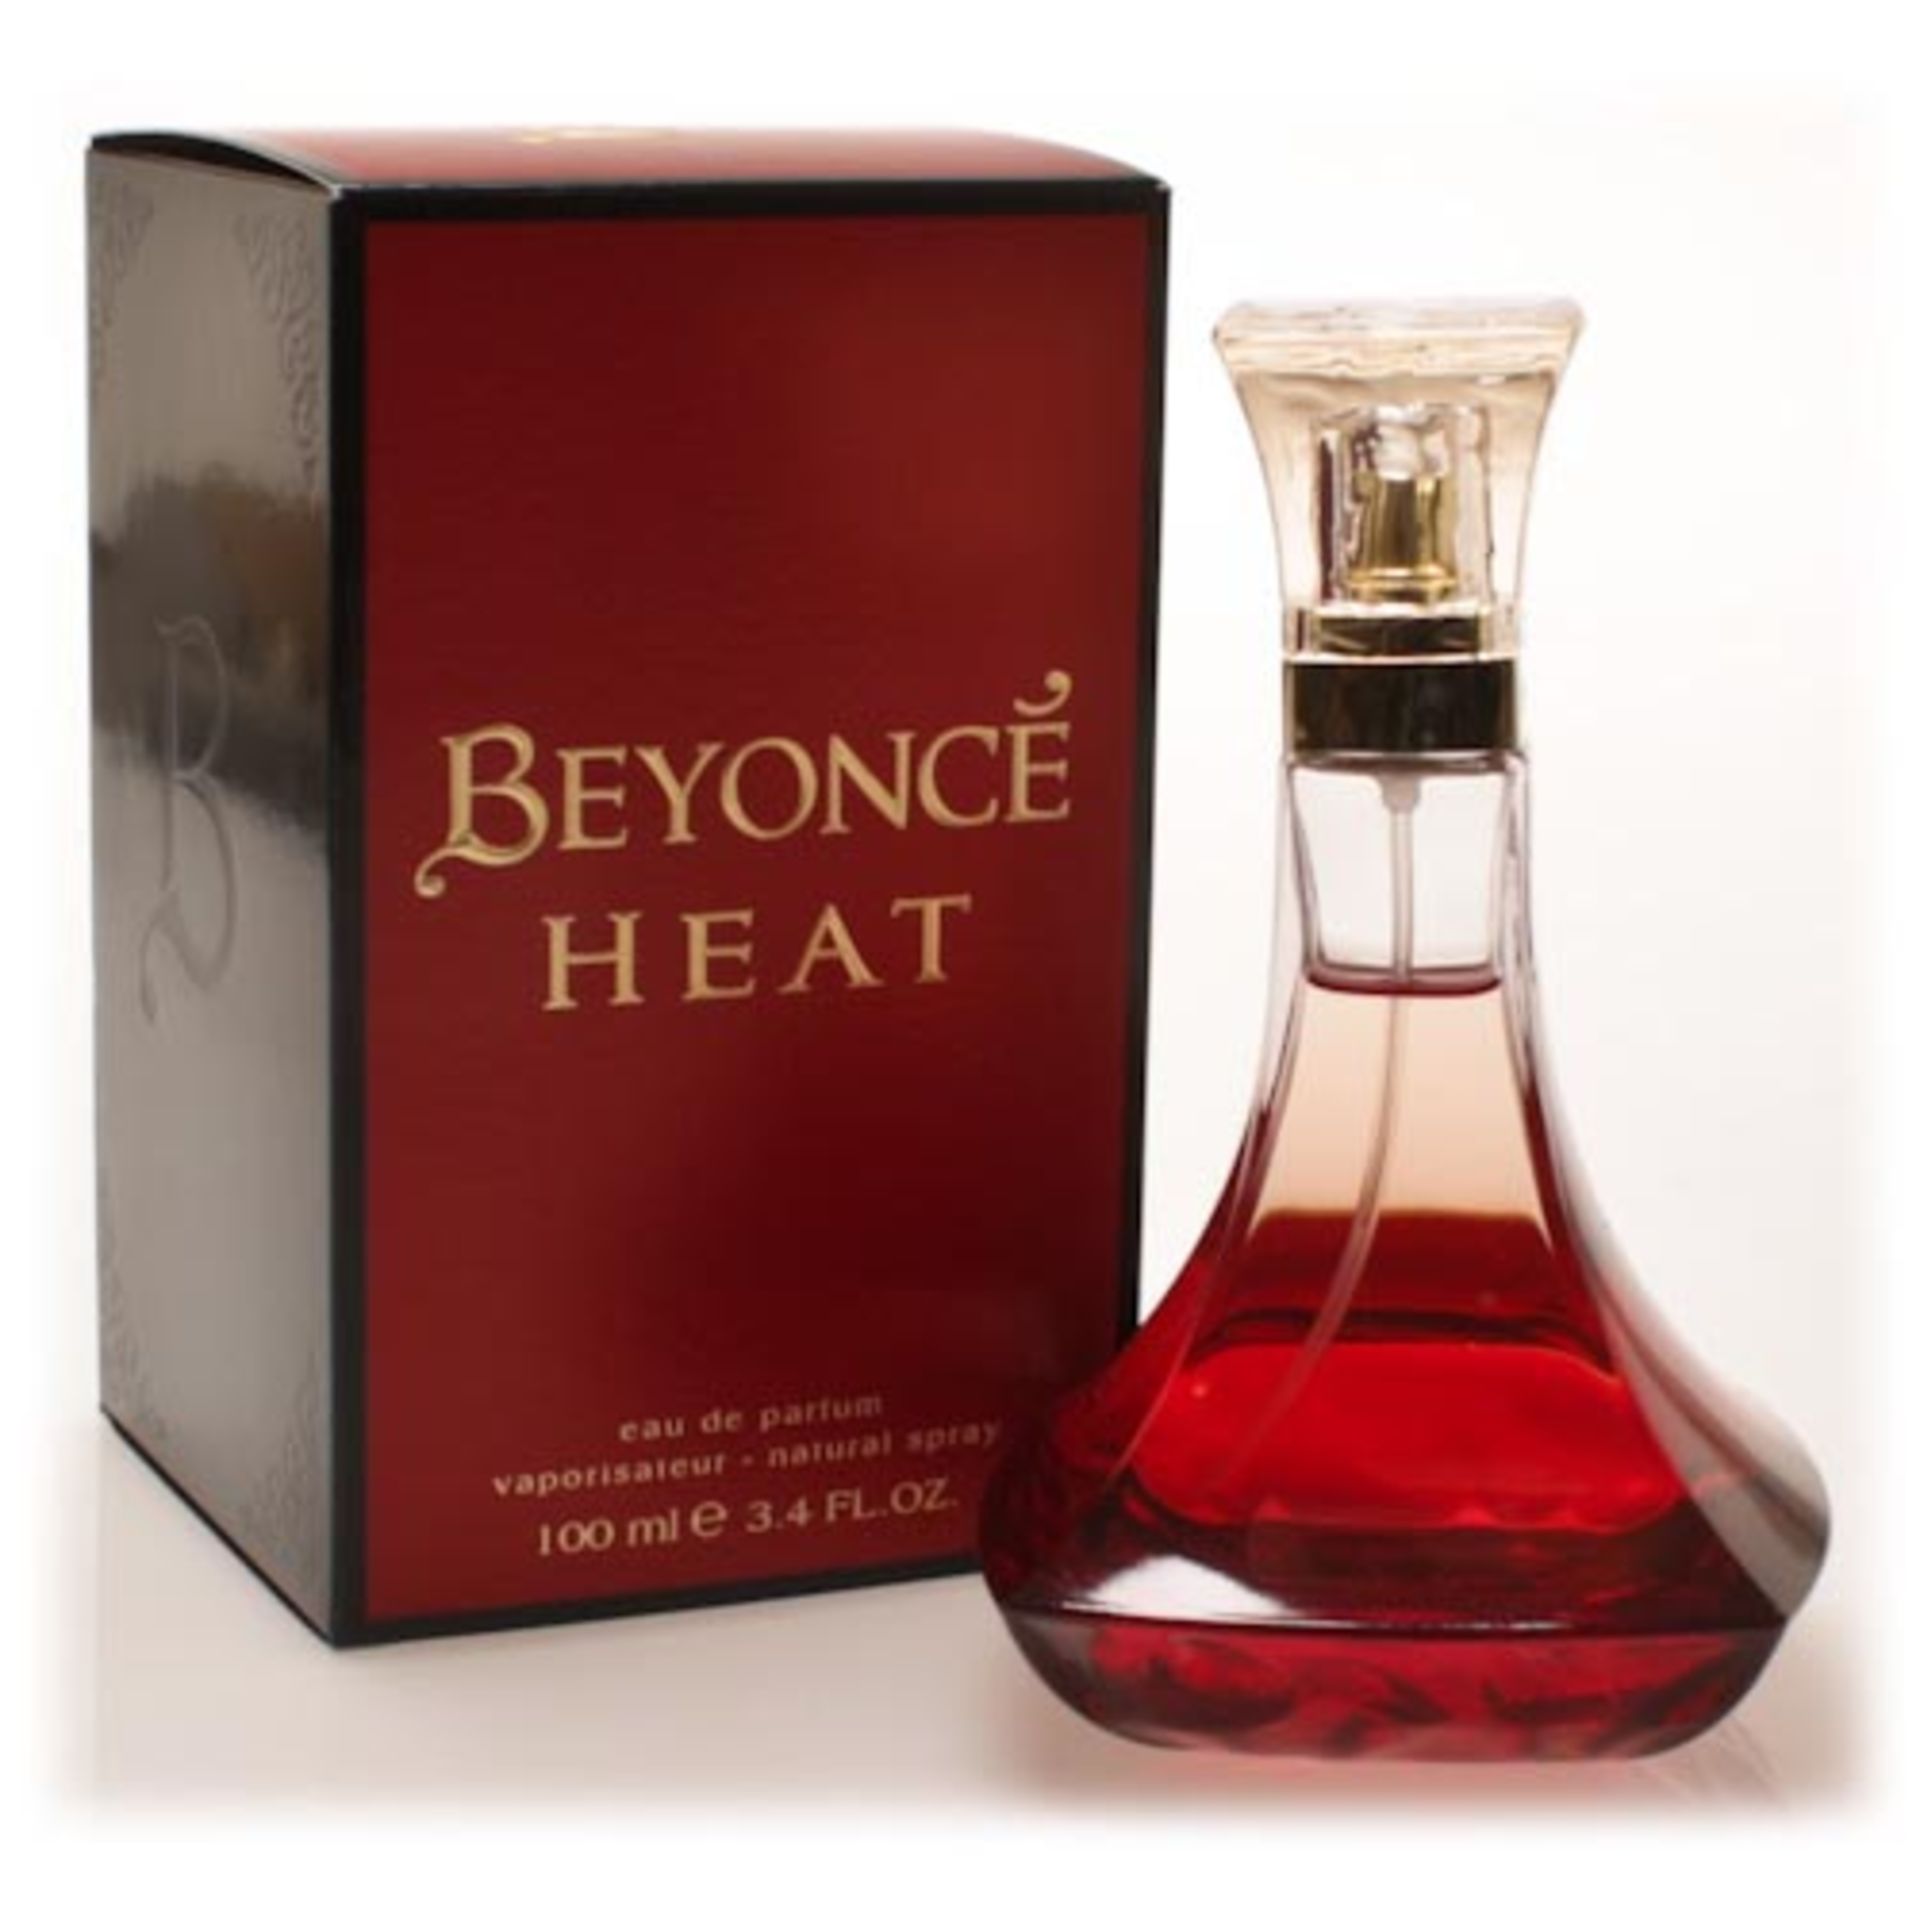 V Beyonce Heat Eau De Perfum